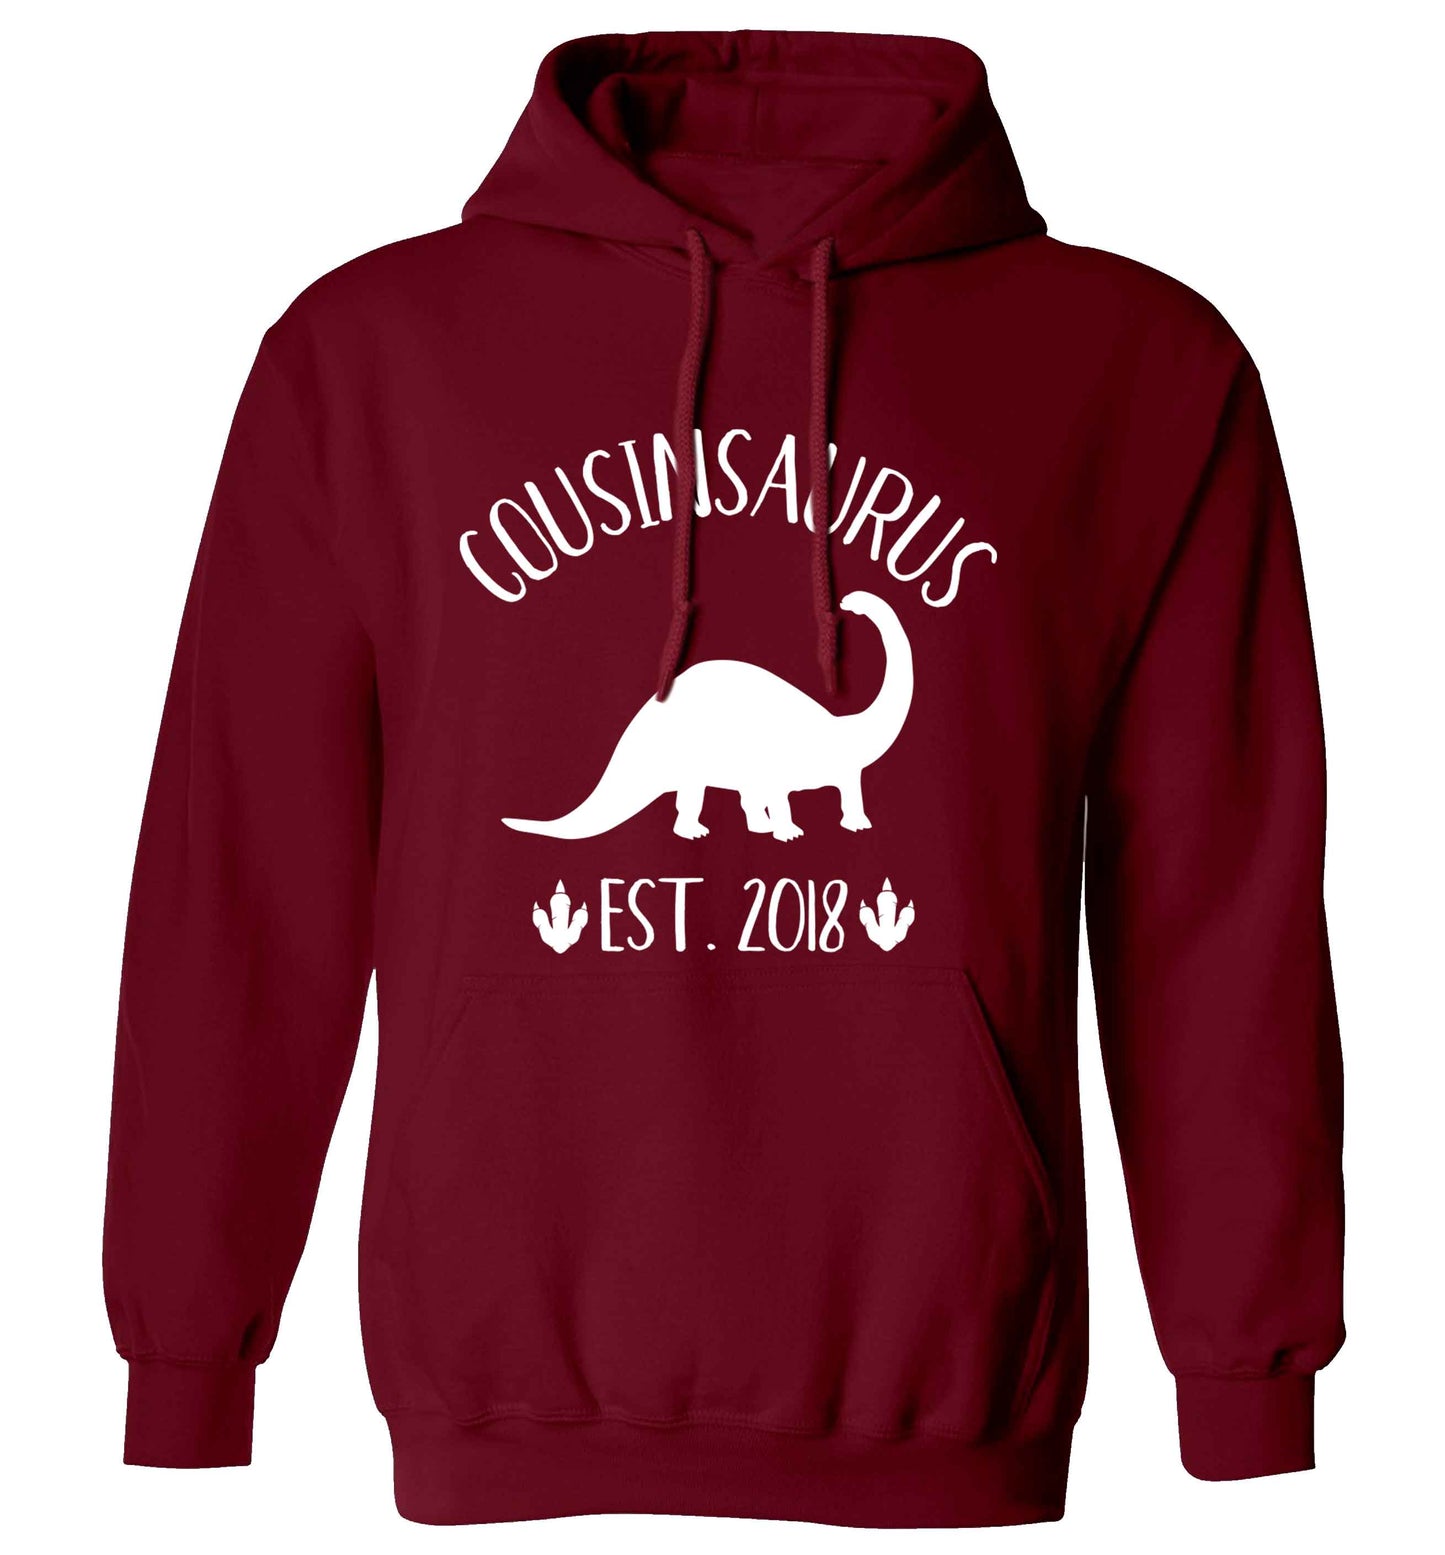 Personalised cousinsaurus since (custom date) adults unisex maroon hoodie 2XL